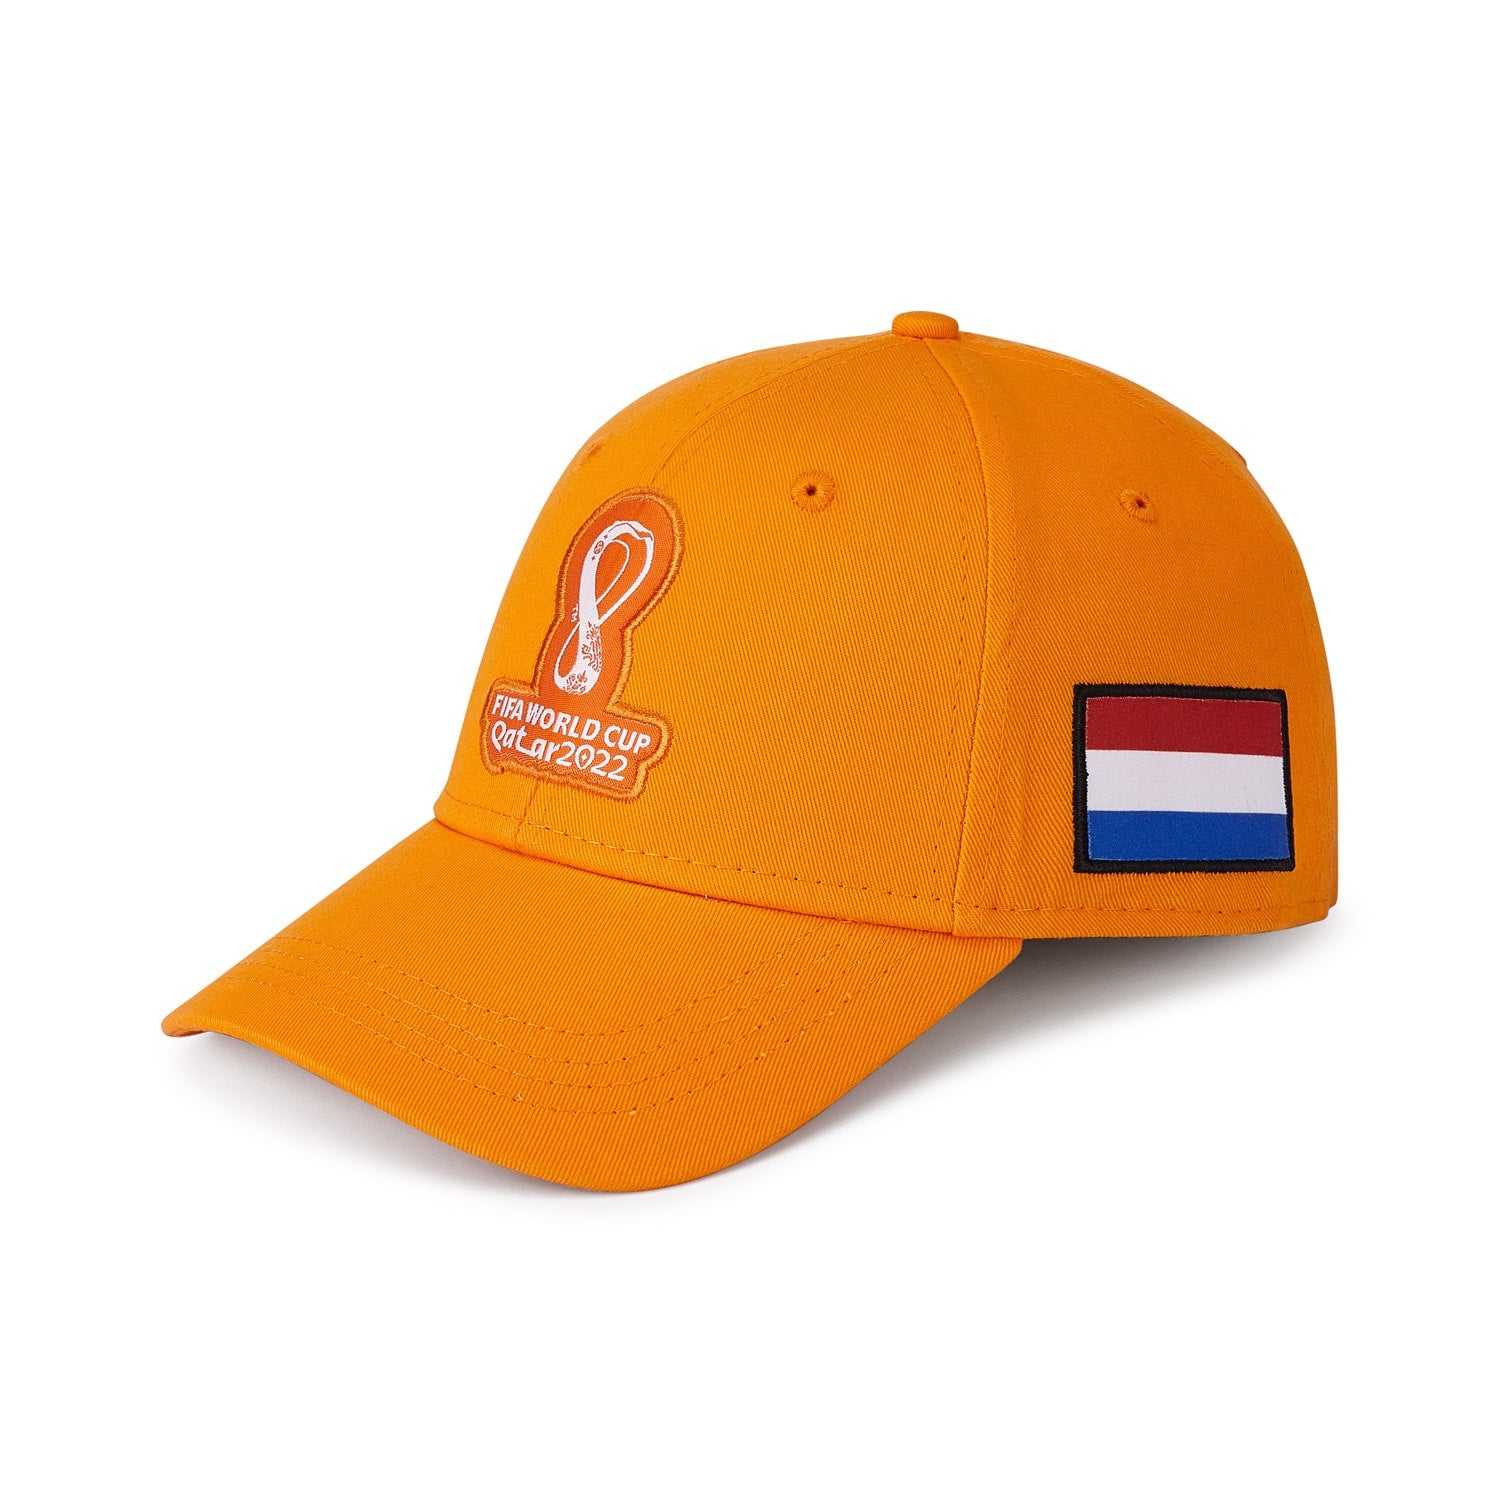 2022 World Cup Netherlands Orange Cap - Mens